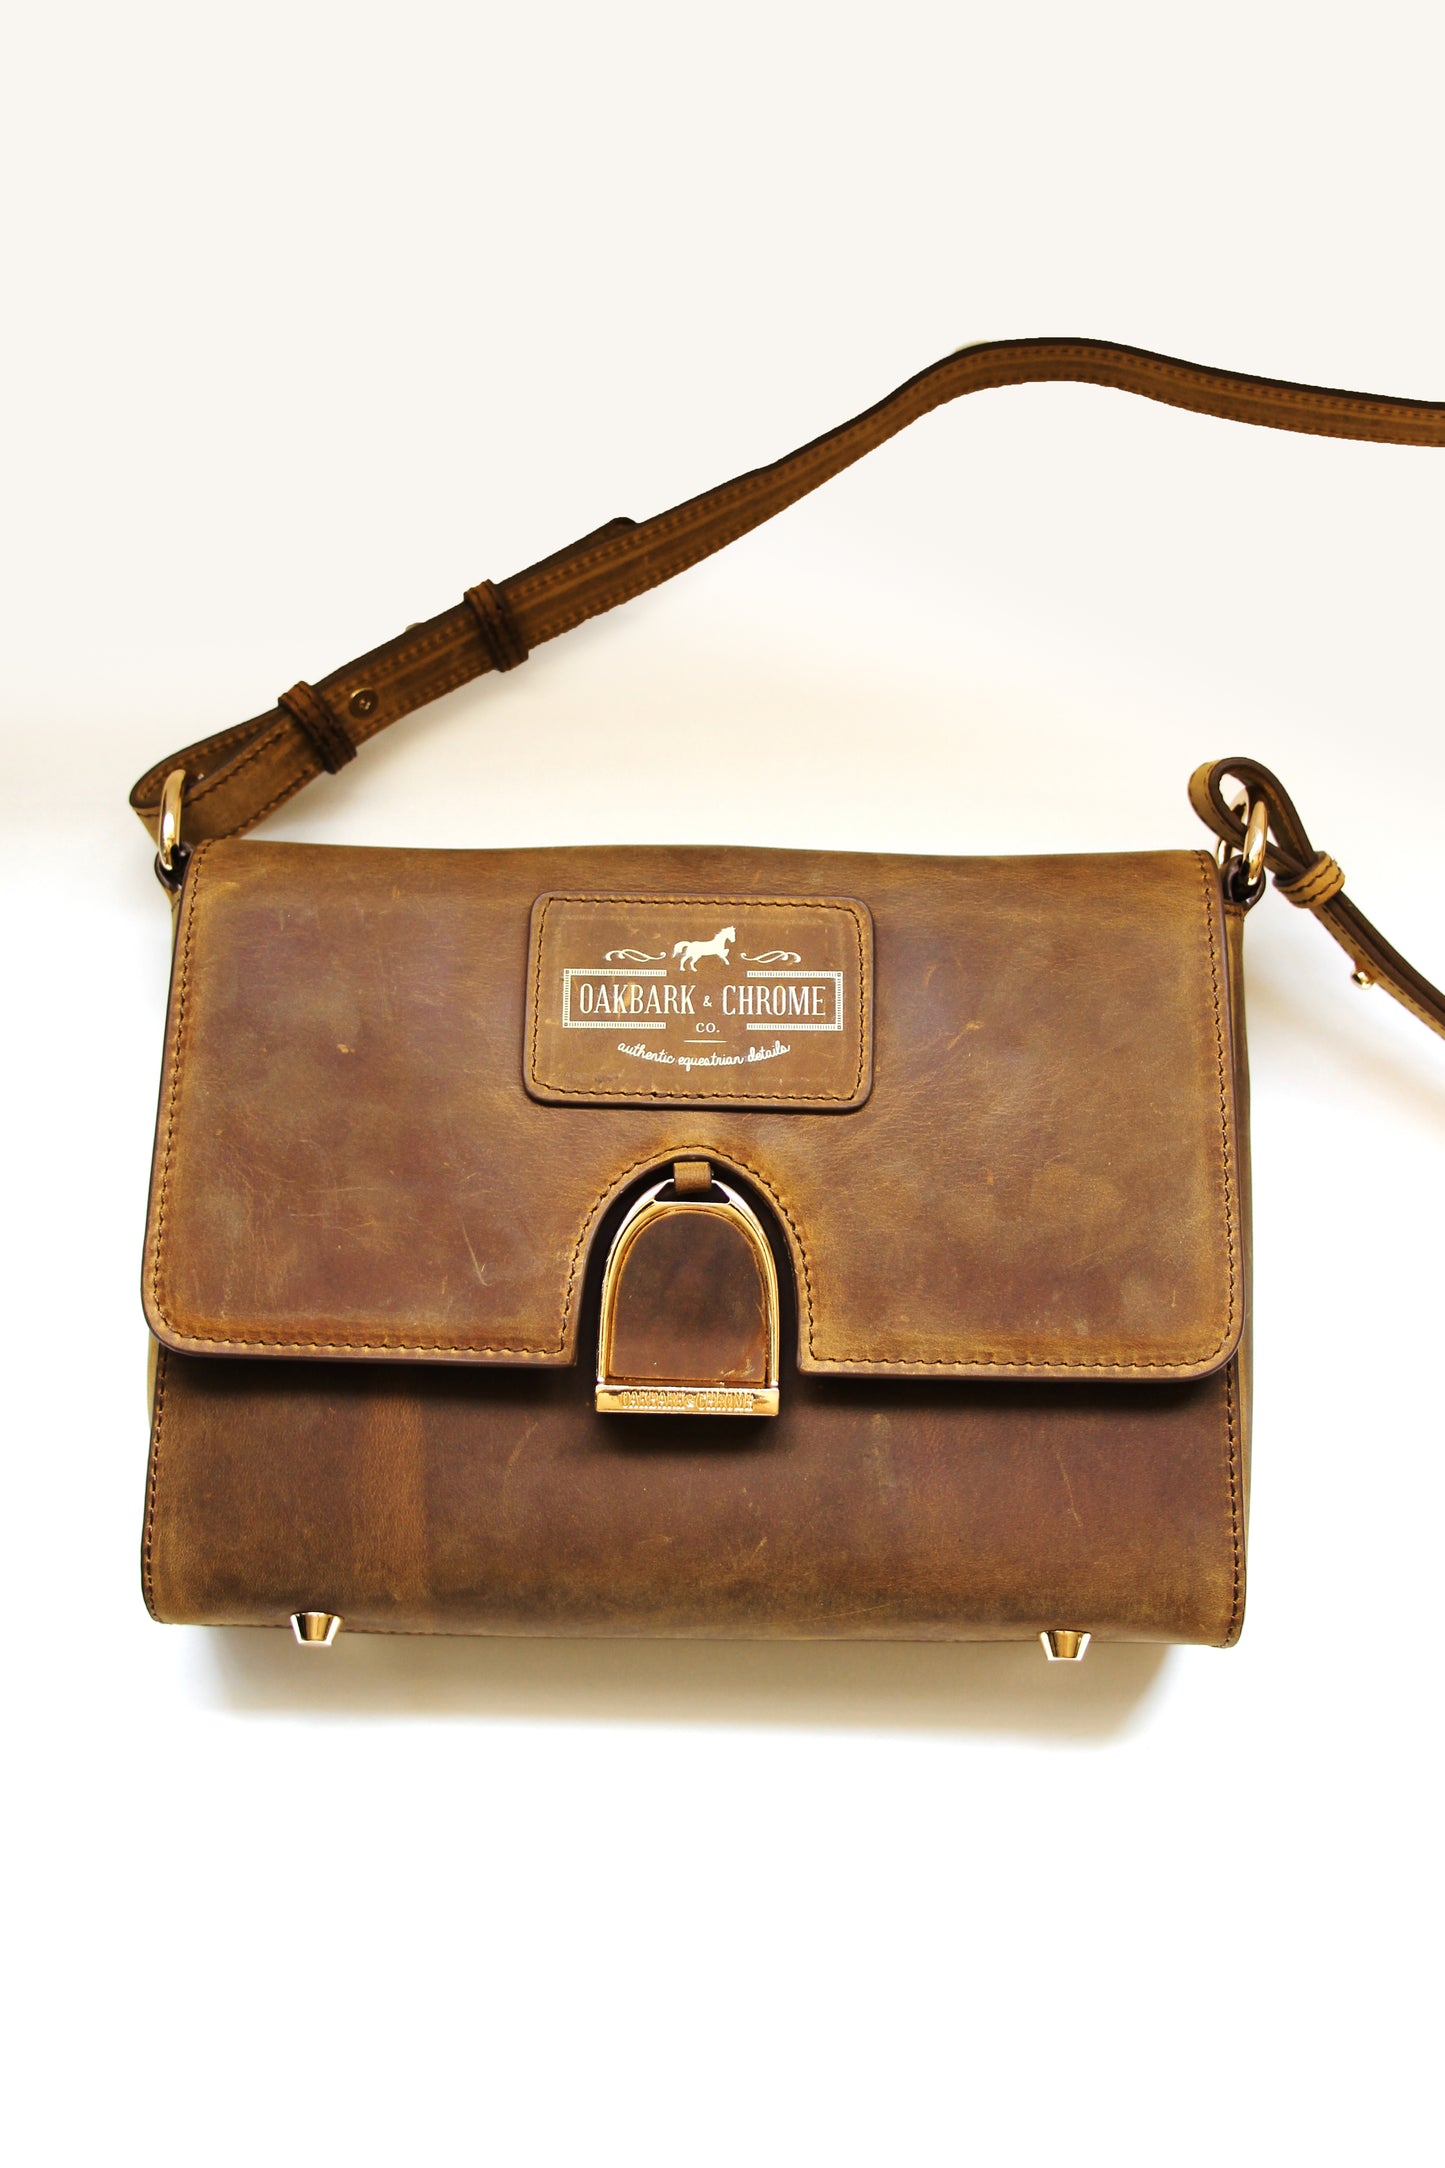 Oakbark & Chrome Limited Edition Shoulder Bag in Barnyard